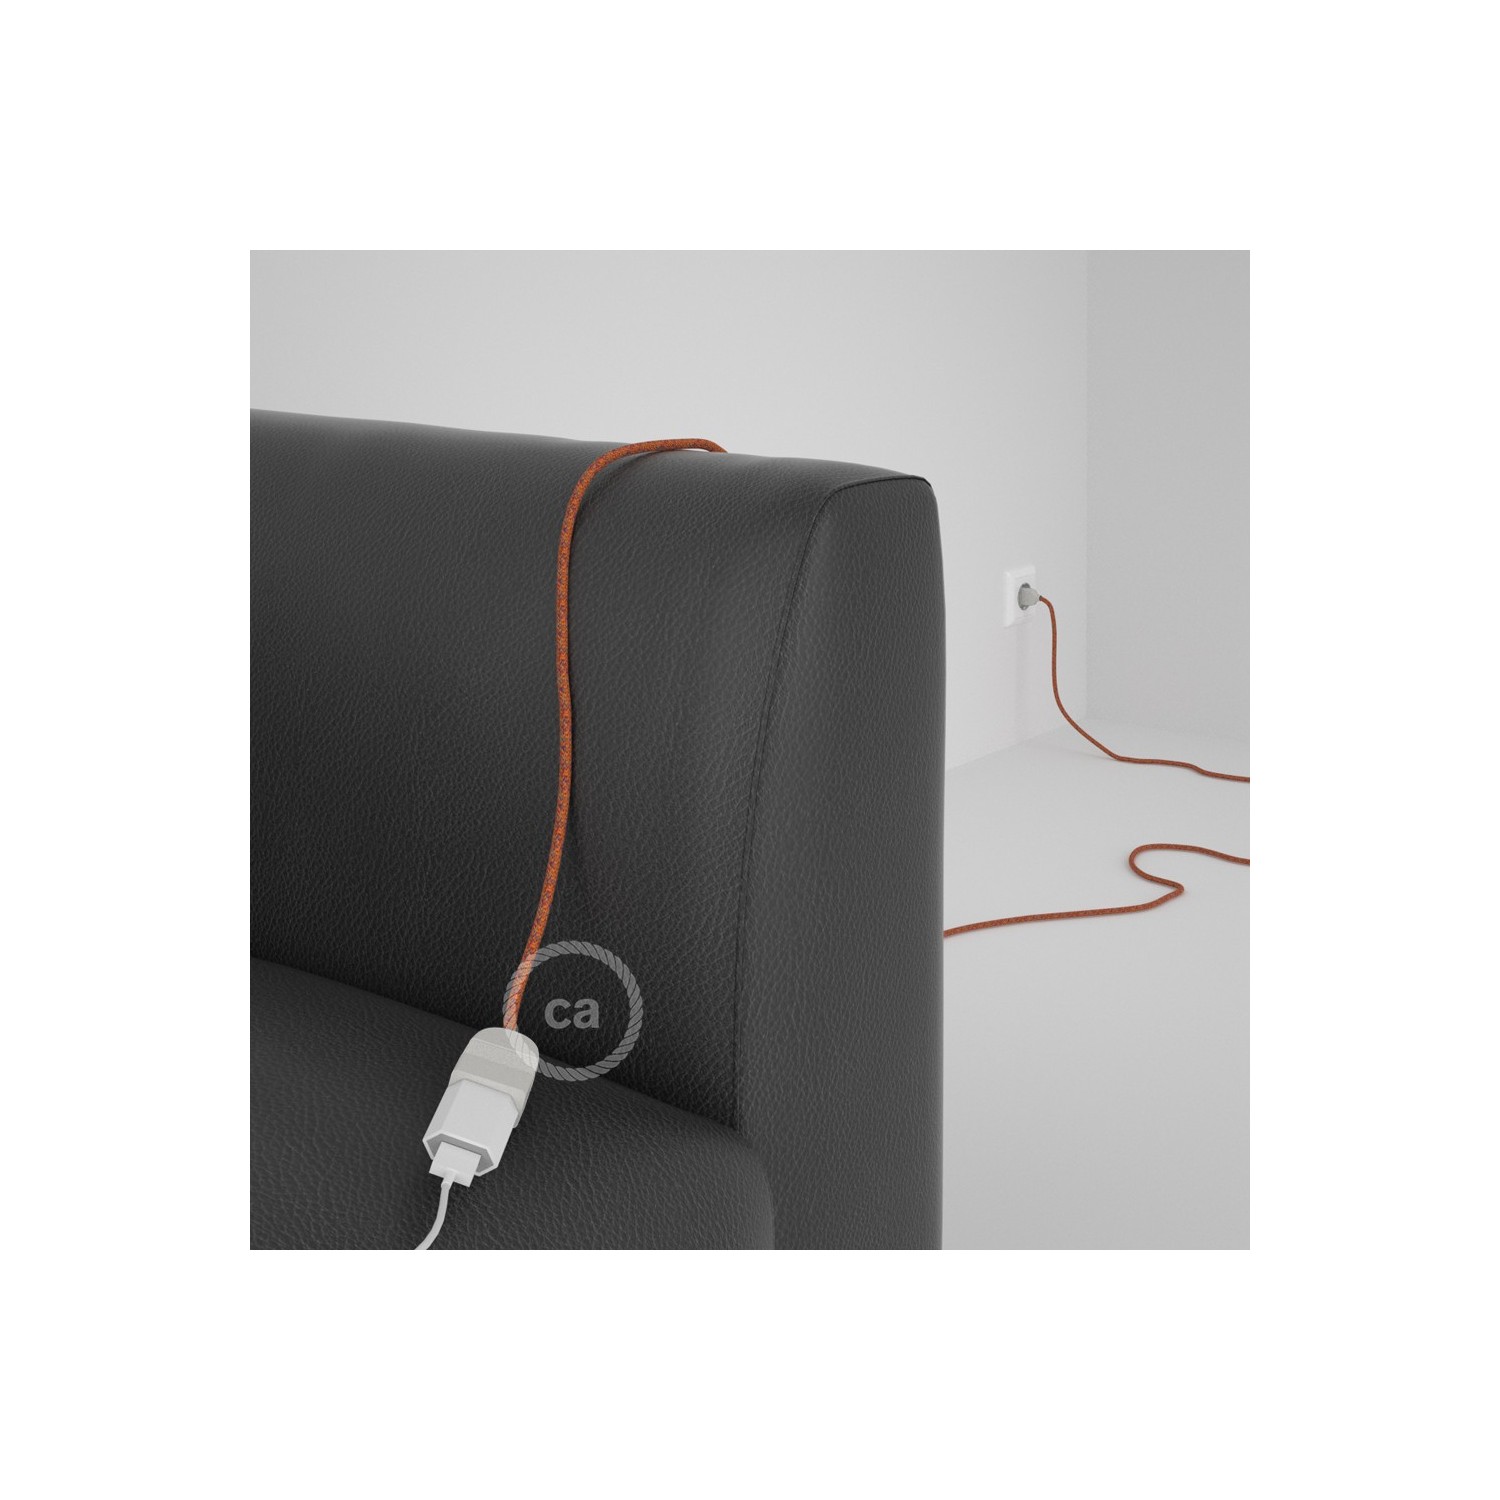 Rallonge électrique avec câble textile RX07 Coton Indian Summer 2P 10A Made in Italy.